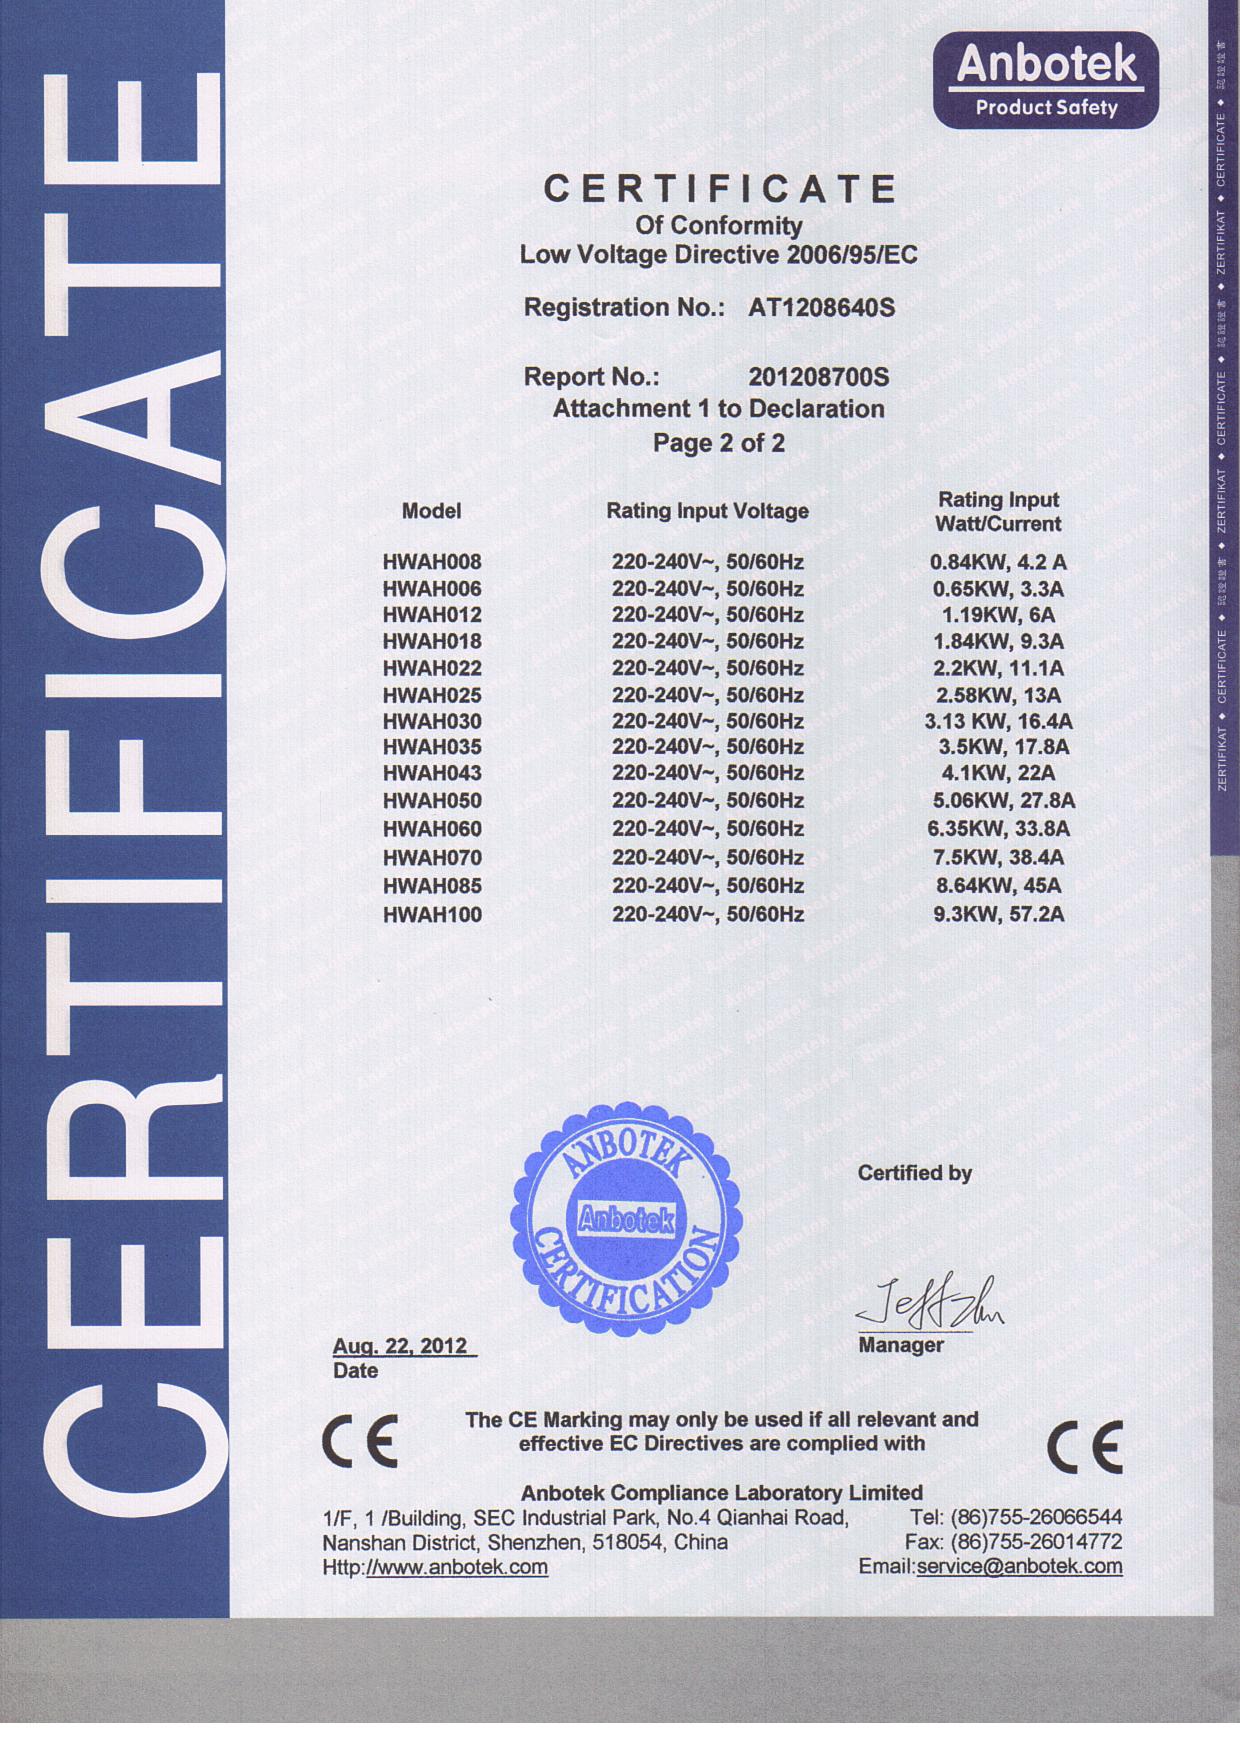 Water source heat pump CE Certificate (LVD-2)